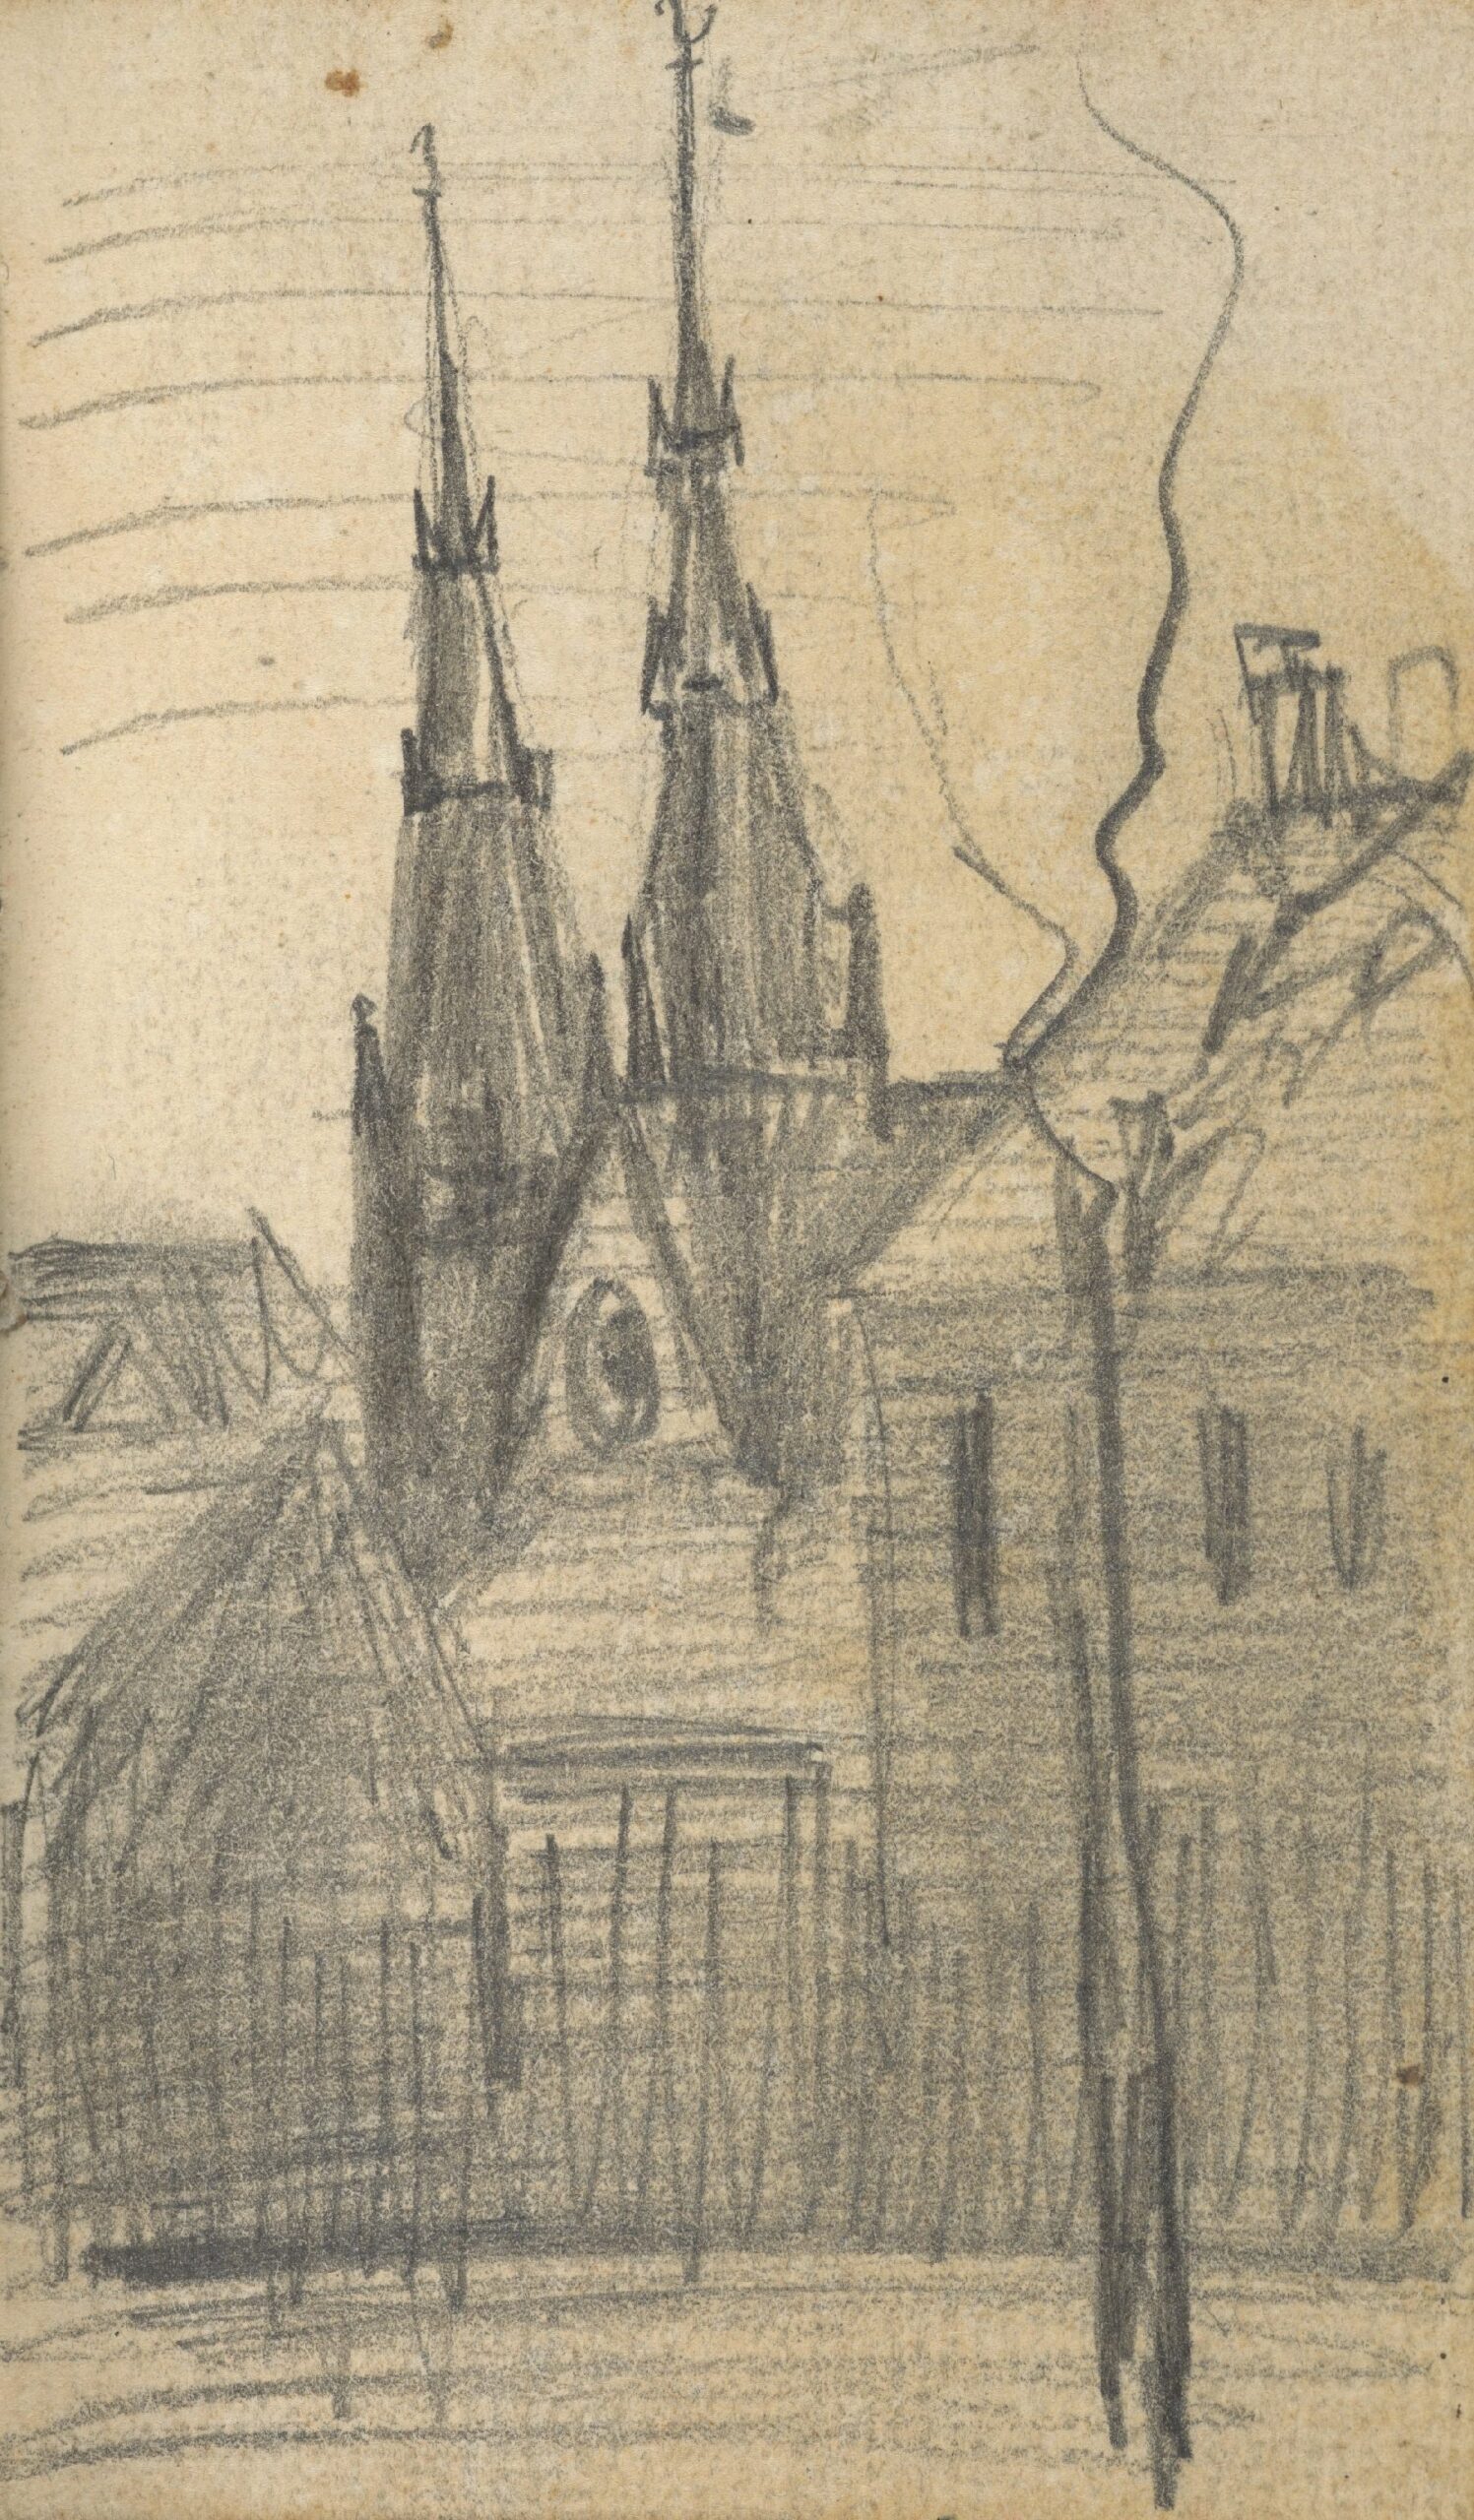 Kerk Vincent van Gogh (1853 - 1890), Nuenen, november 1884-december 1885